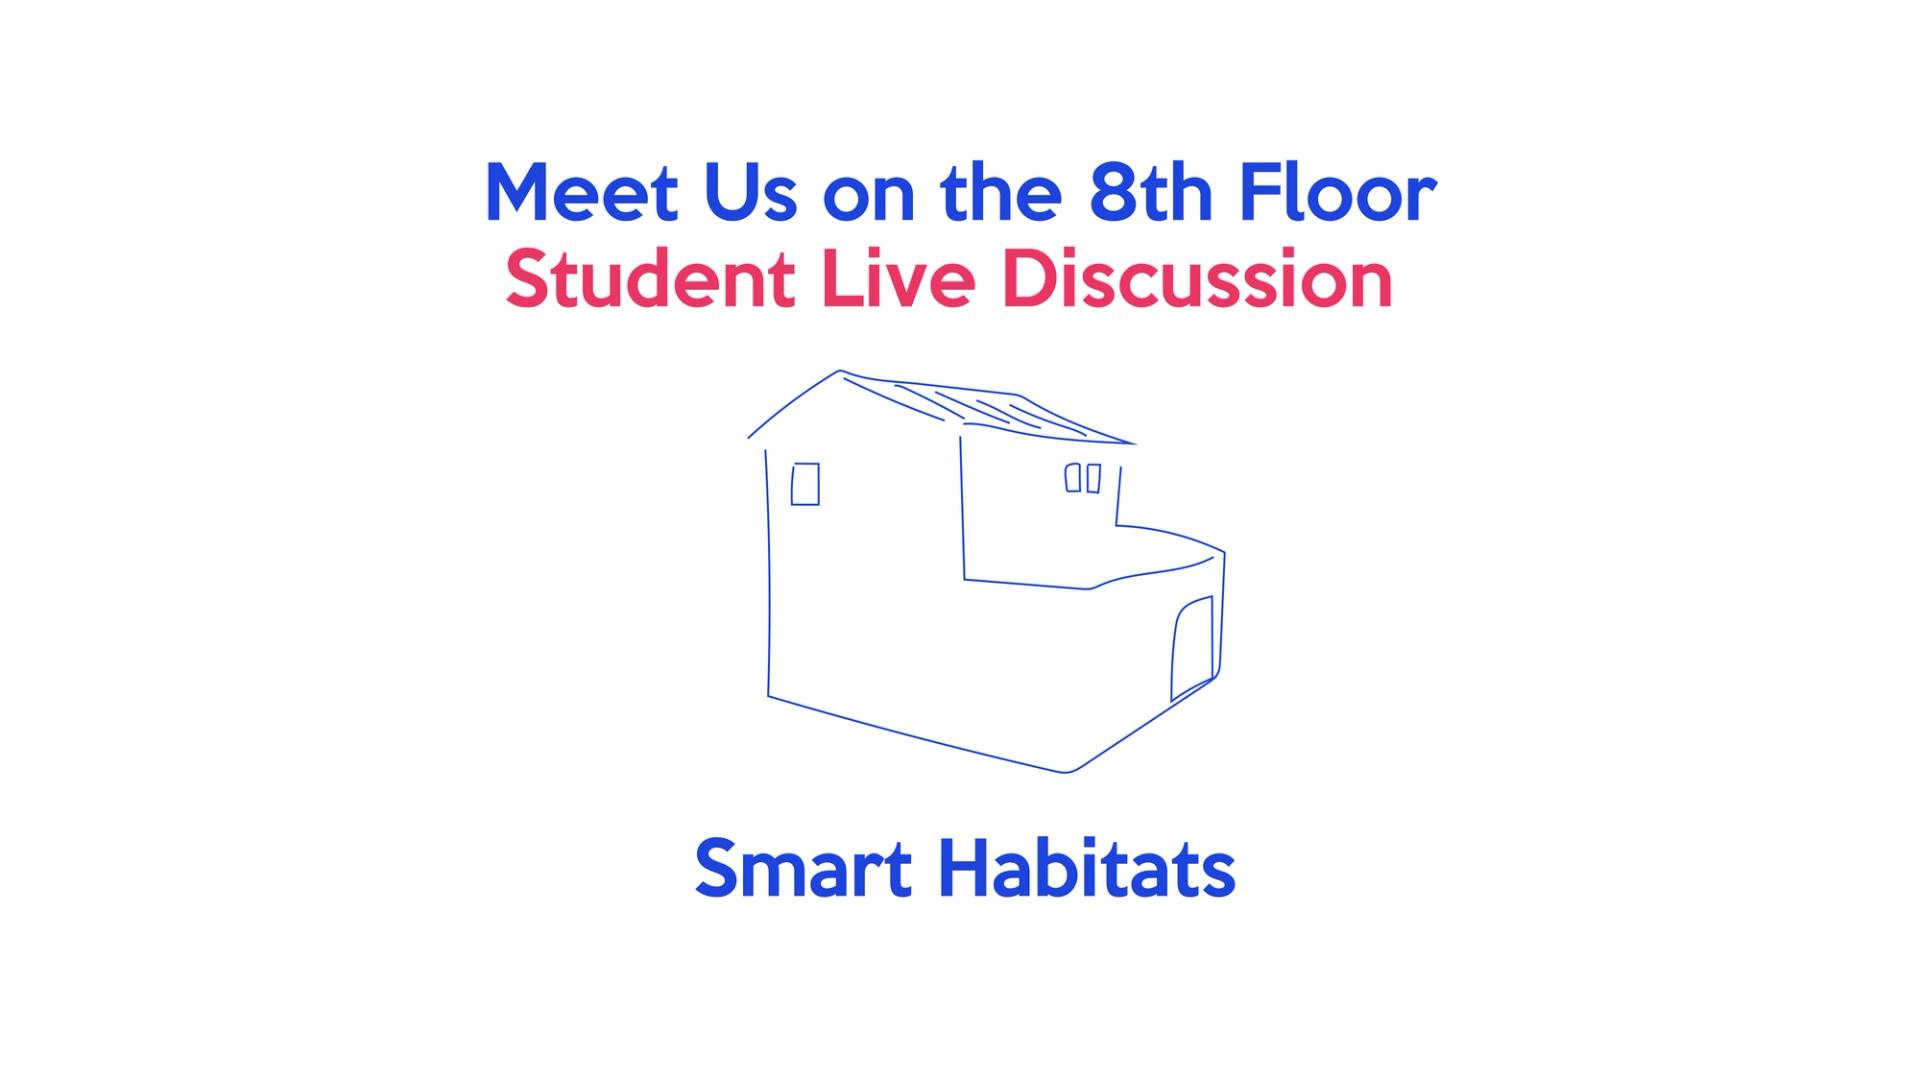 Meet Us on the 8th Floor: Smart Habitats